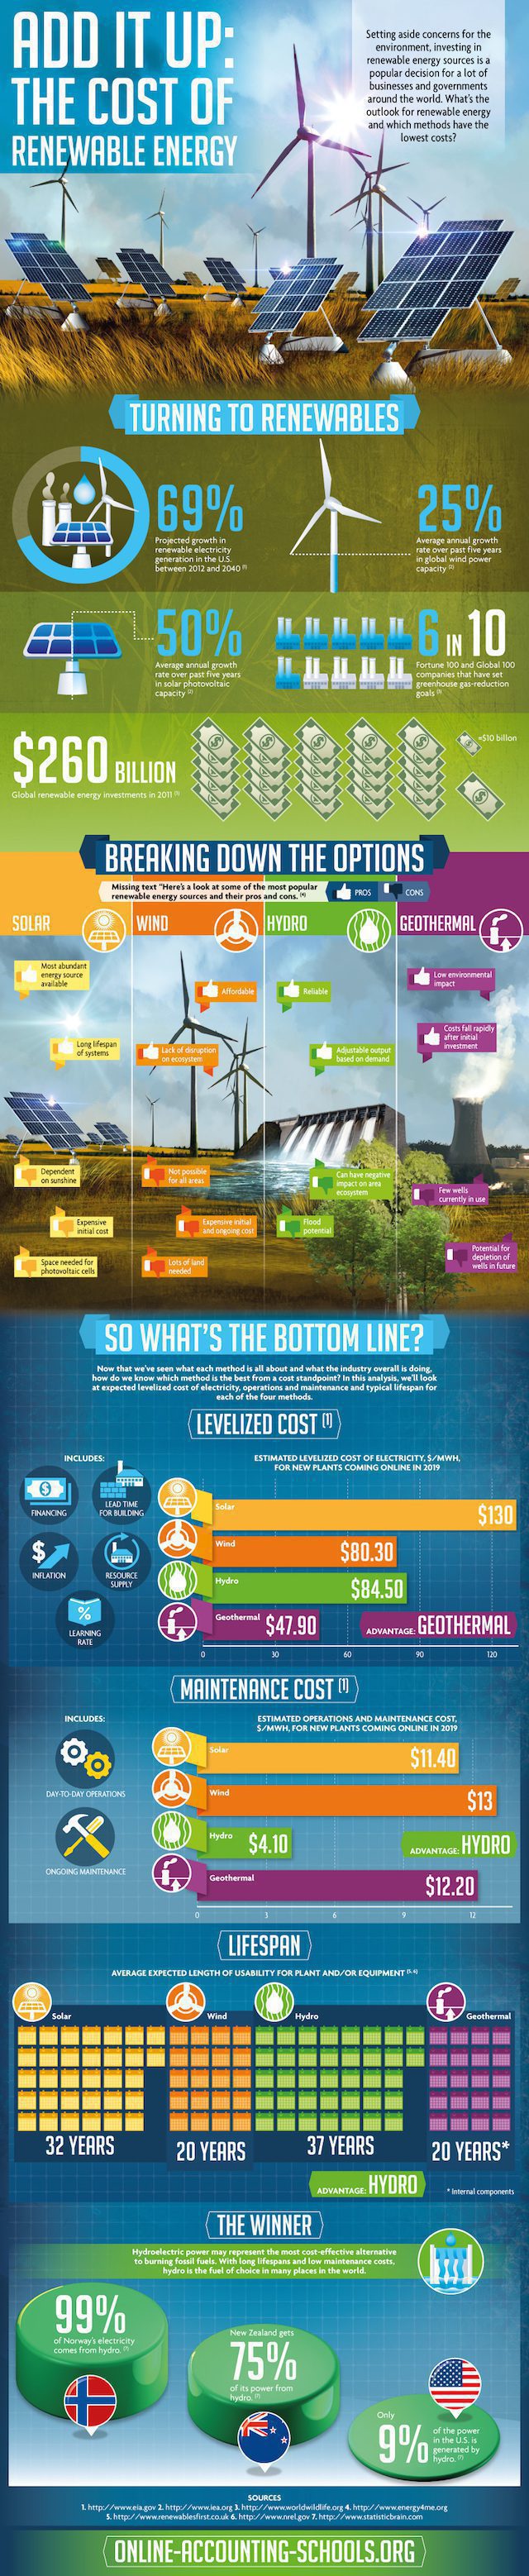 The Cost of Renewable Energy